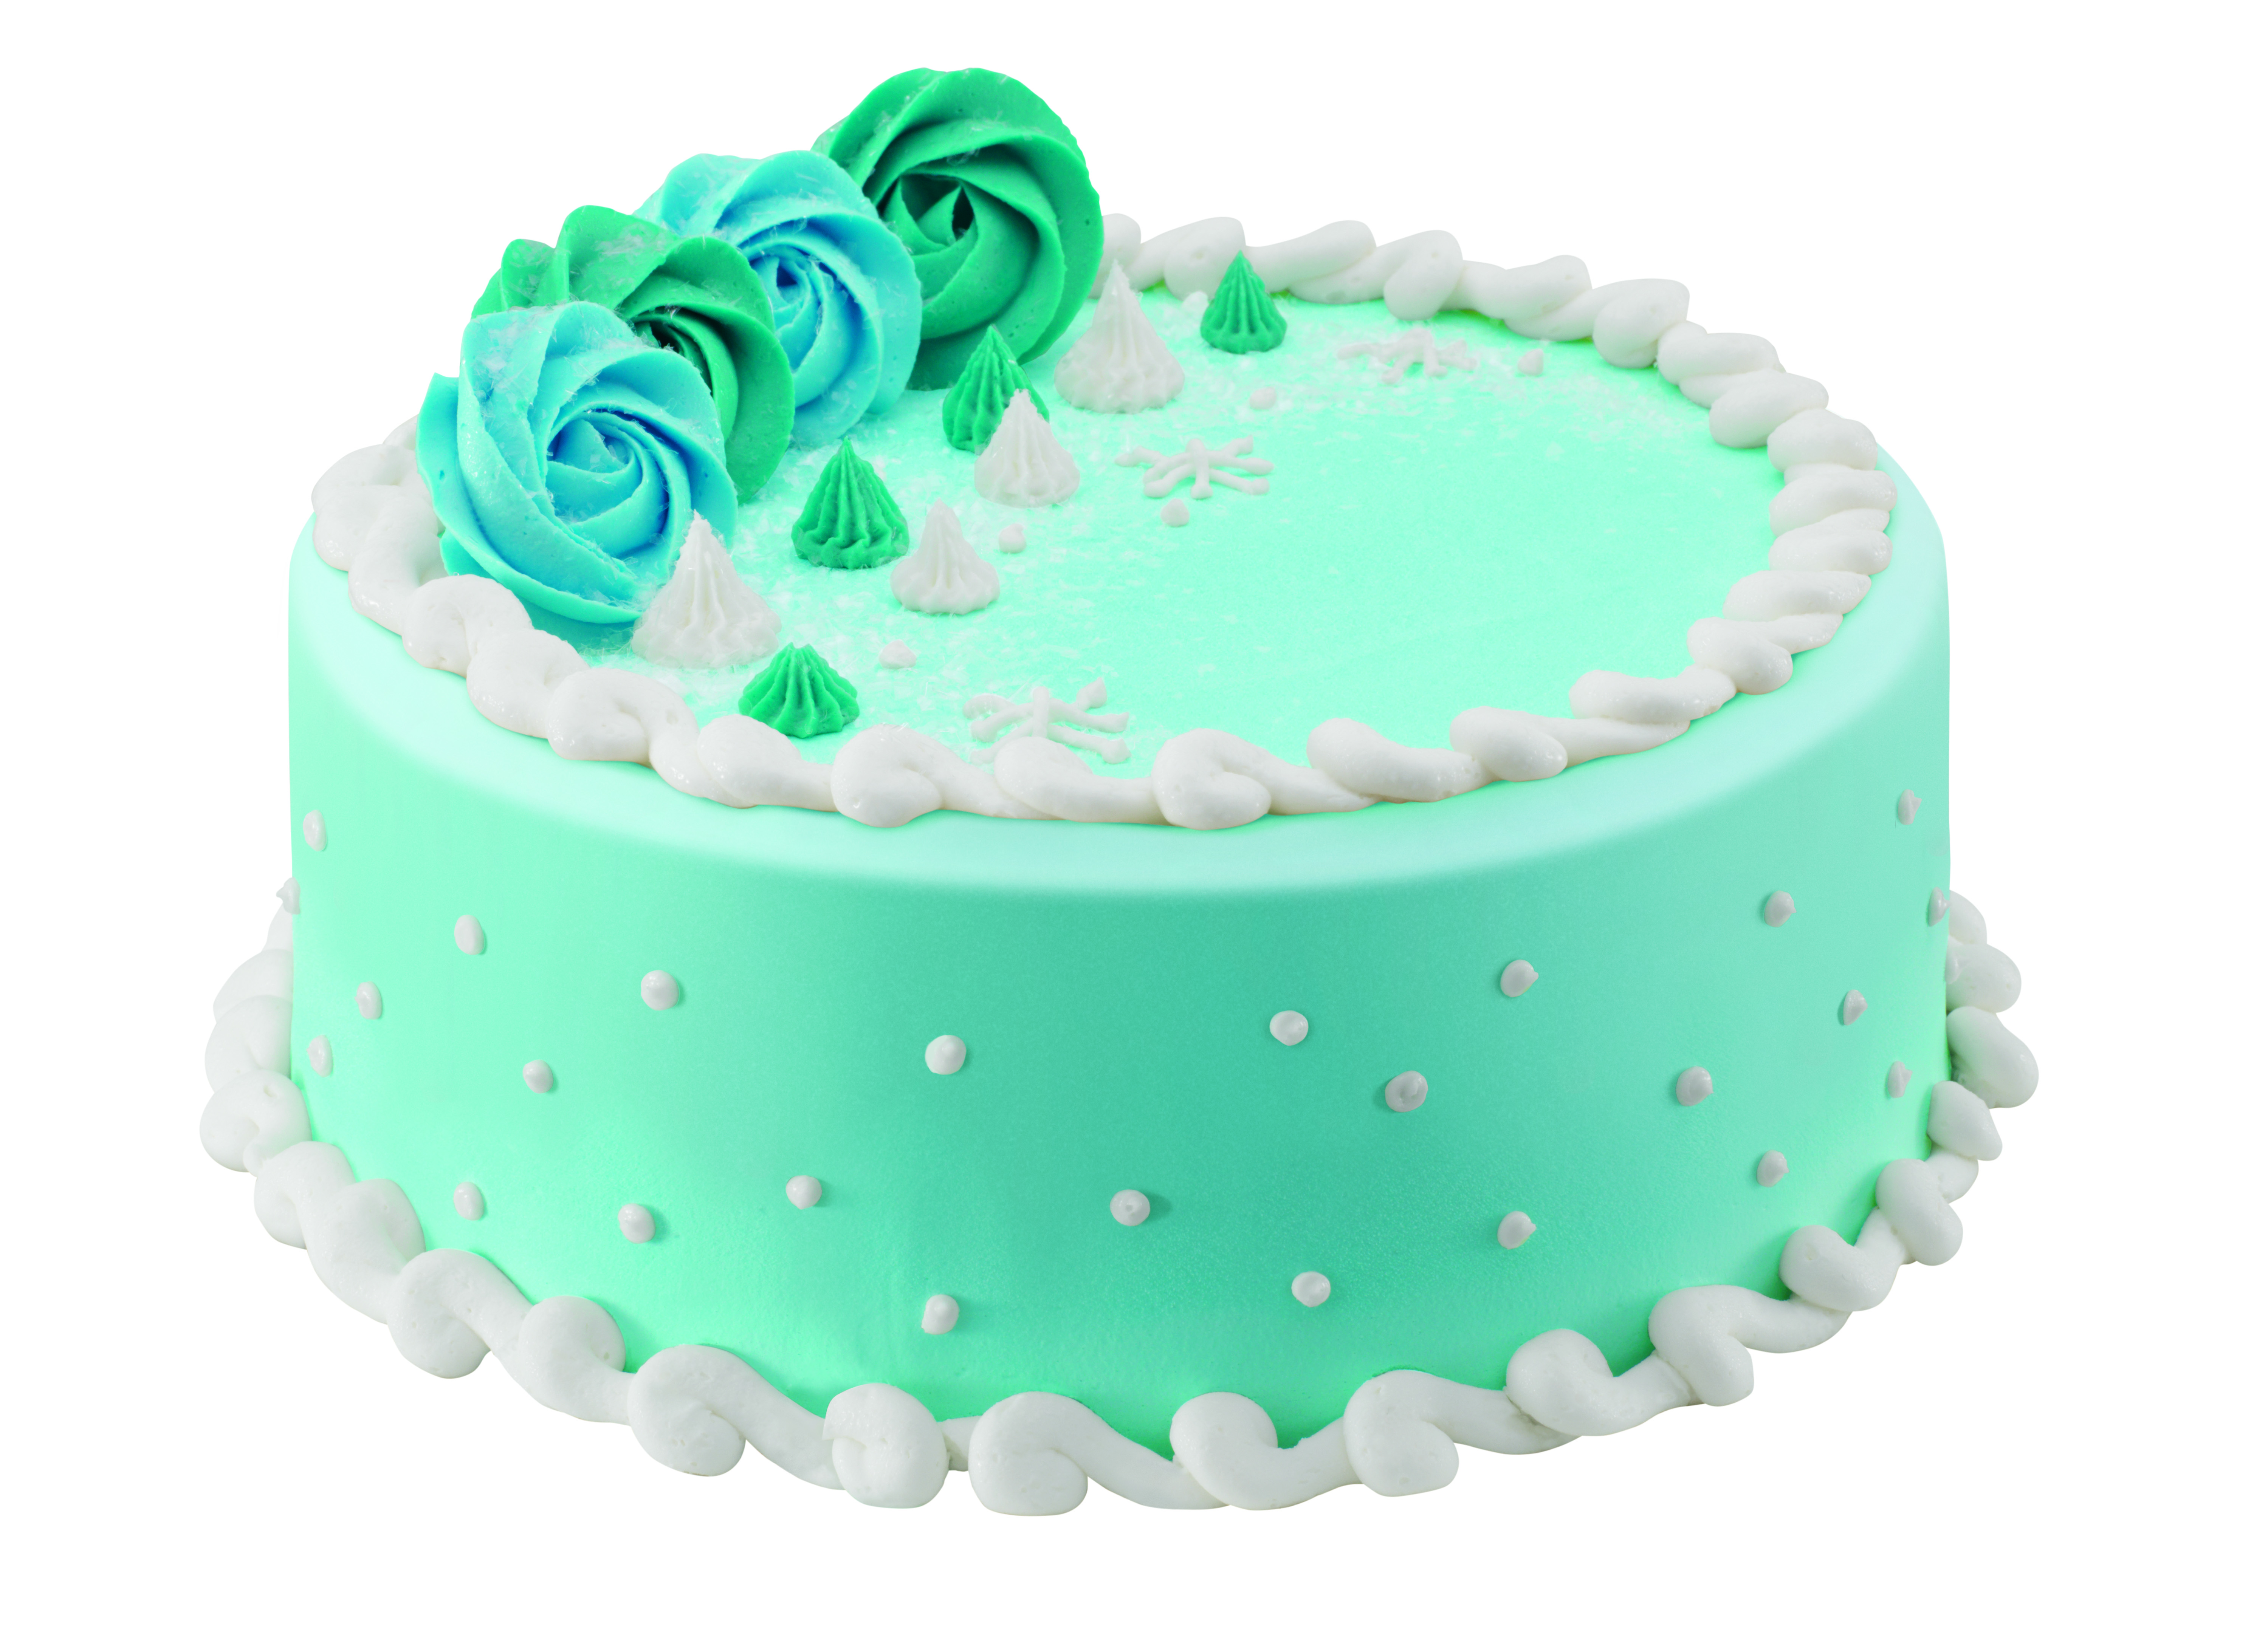 L cake. Торт Баскин Роббинс. Торт мороженое. Торт на день рождения голубой. Торт мороженое голубого цвета.